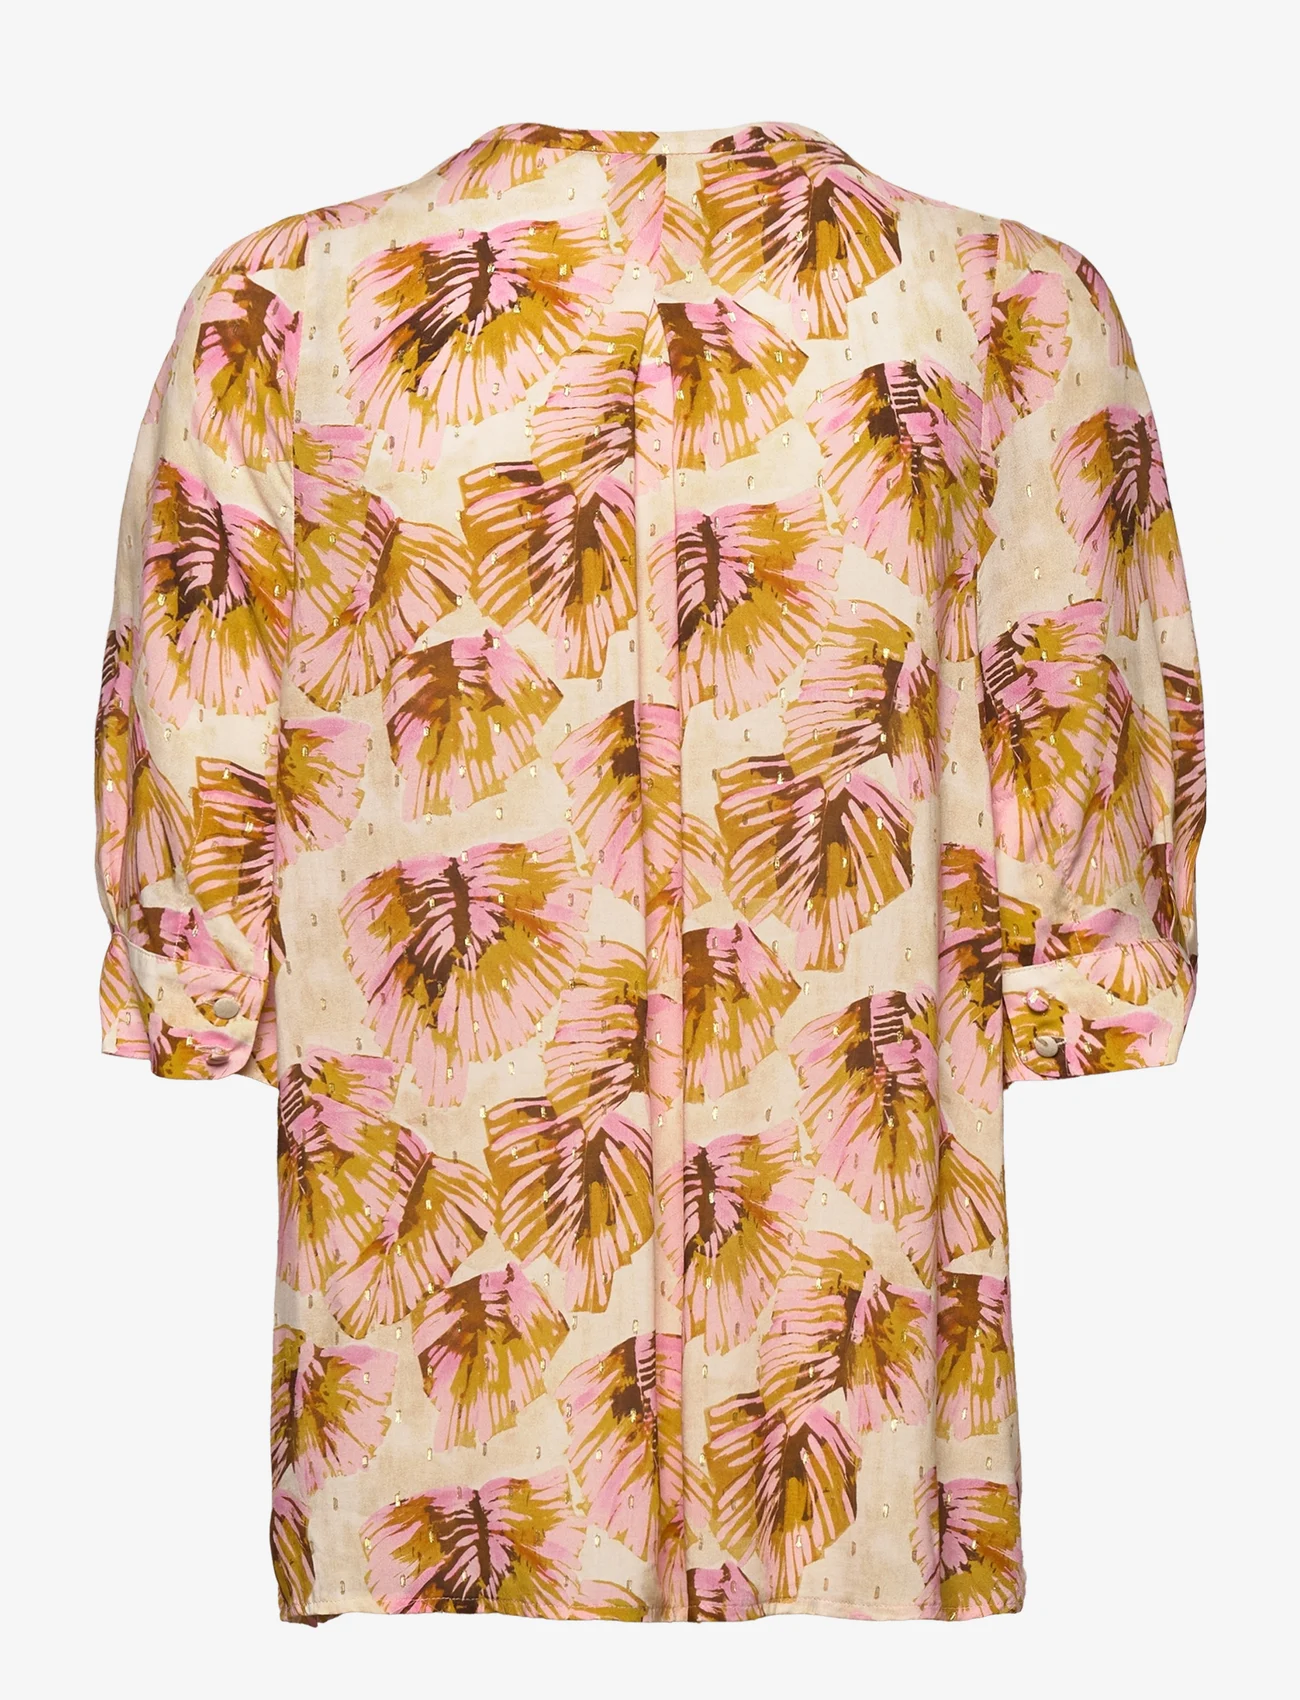 Dante6 - Esmay palm leaves blouse - kortærmede bluser - multicolour - 1